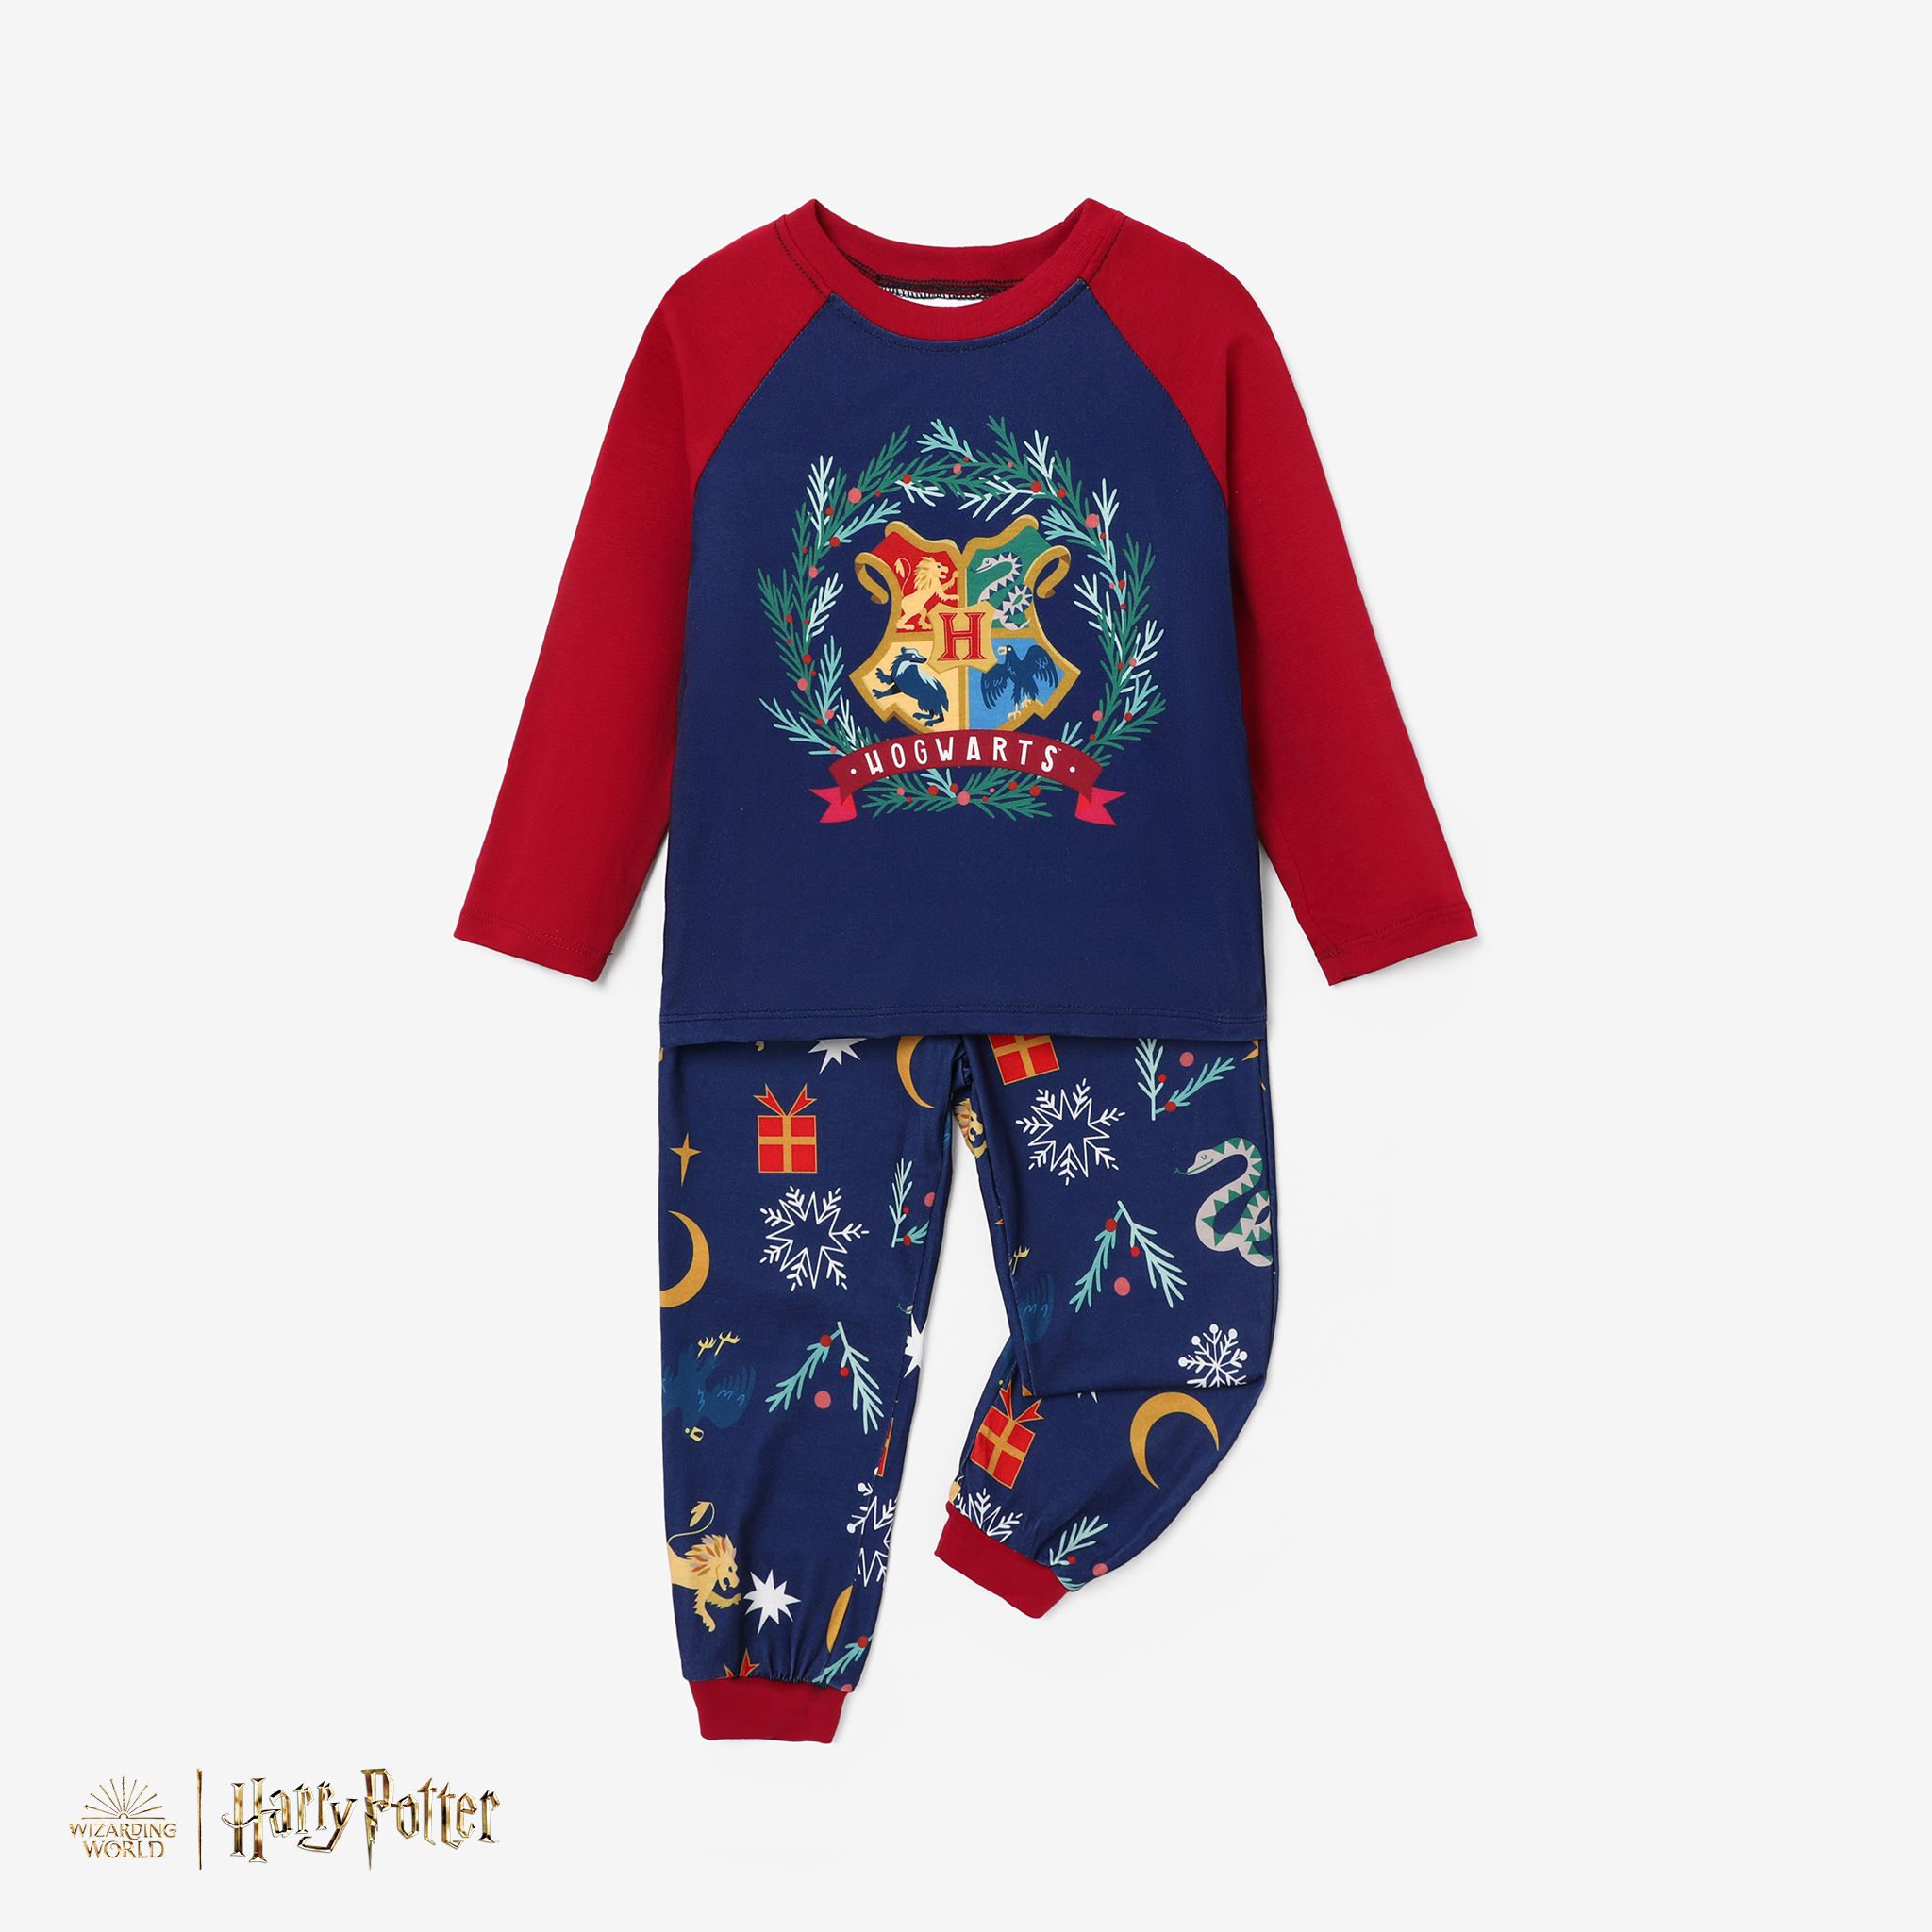 Harry Potter Christmas Family Matching Character Print Long-sleeve Pajamas Sets (Flame Resistant)